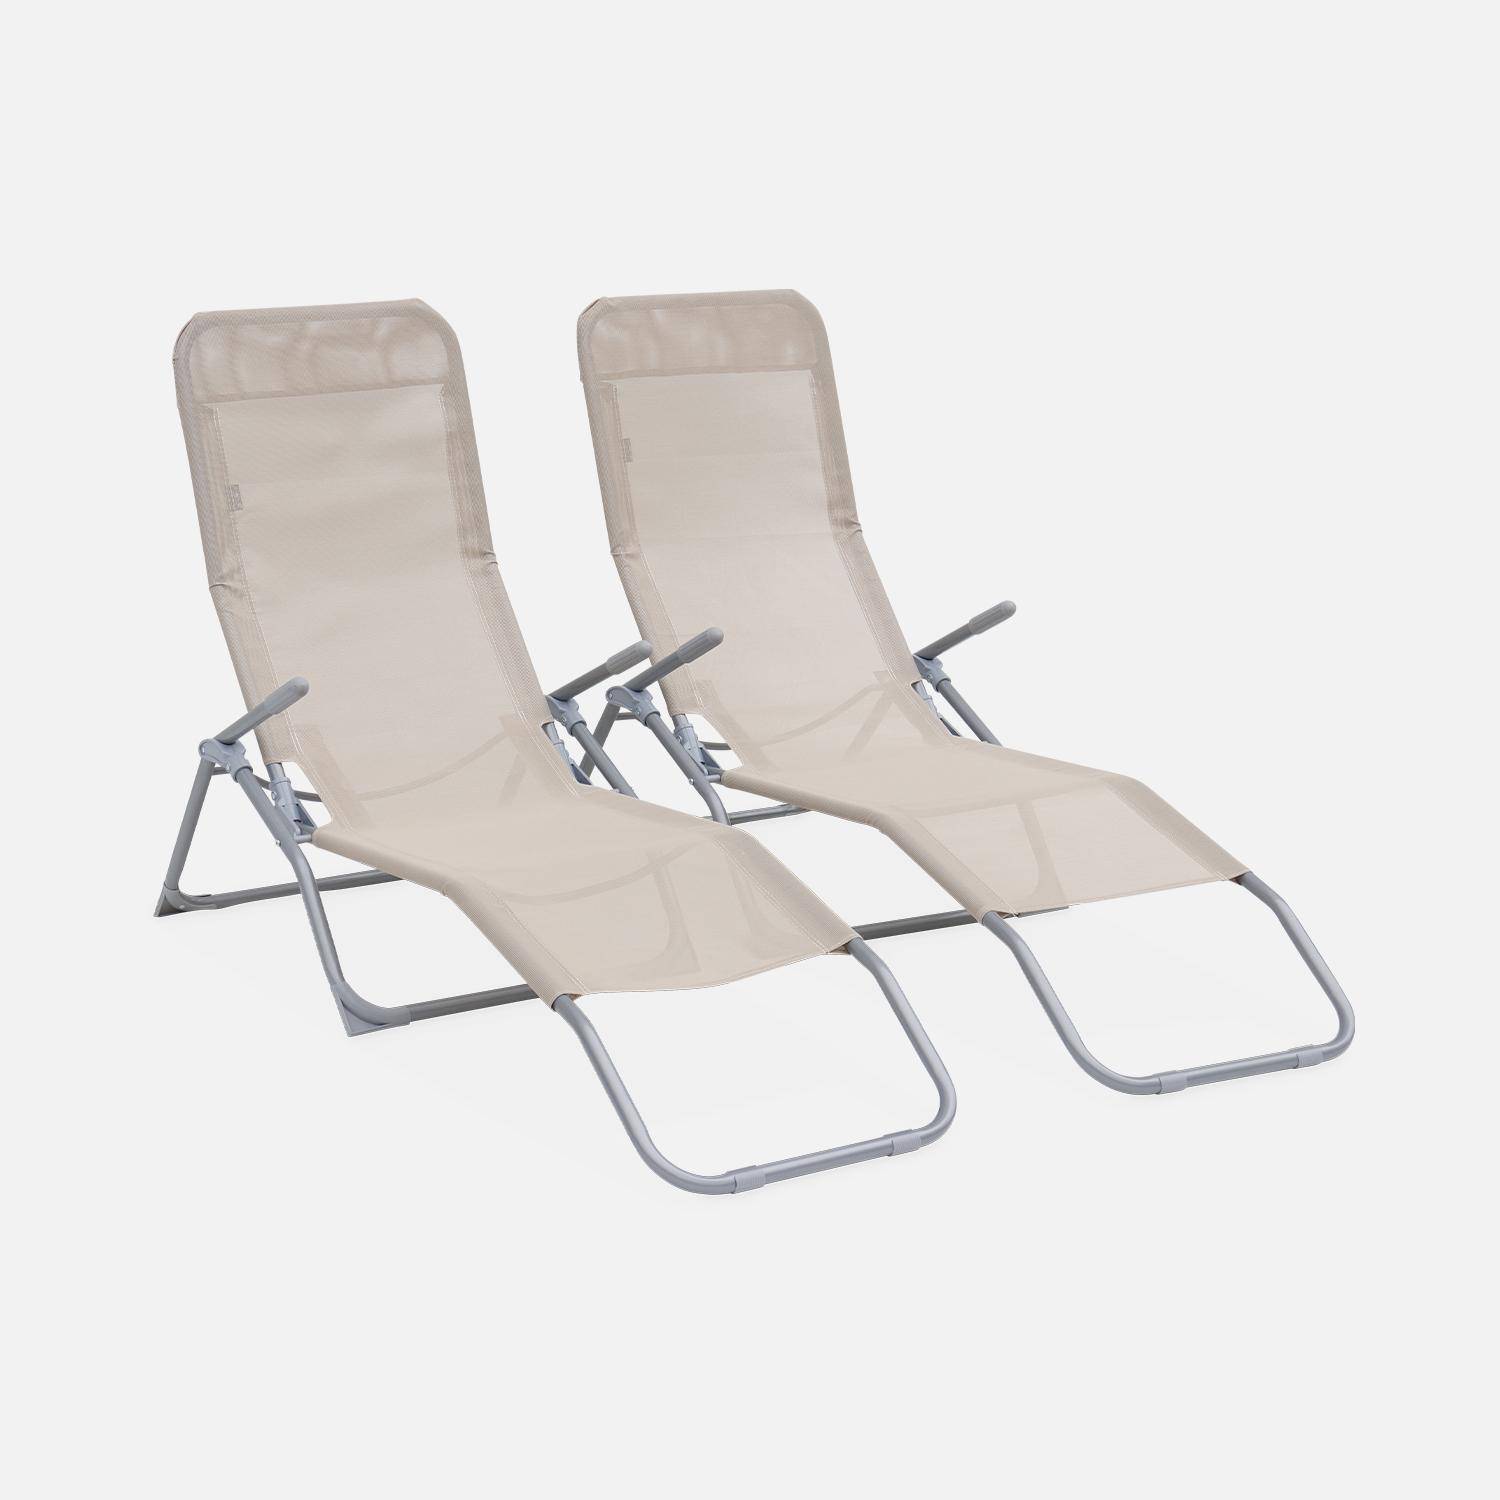 Set van 2 opvouwbare ligstoelen - Levito Taupe - Ligstoelen van textileen, 2 posities, opvouwbare ligstoelen Photo1